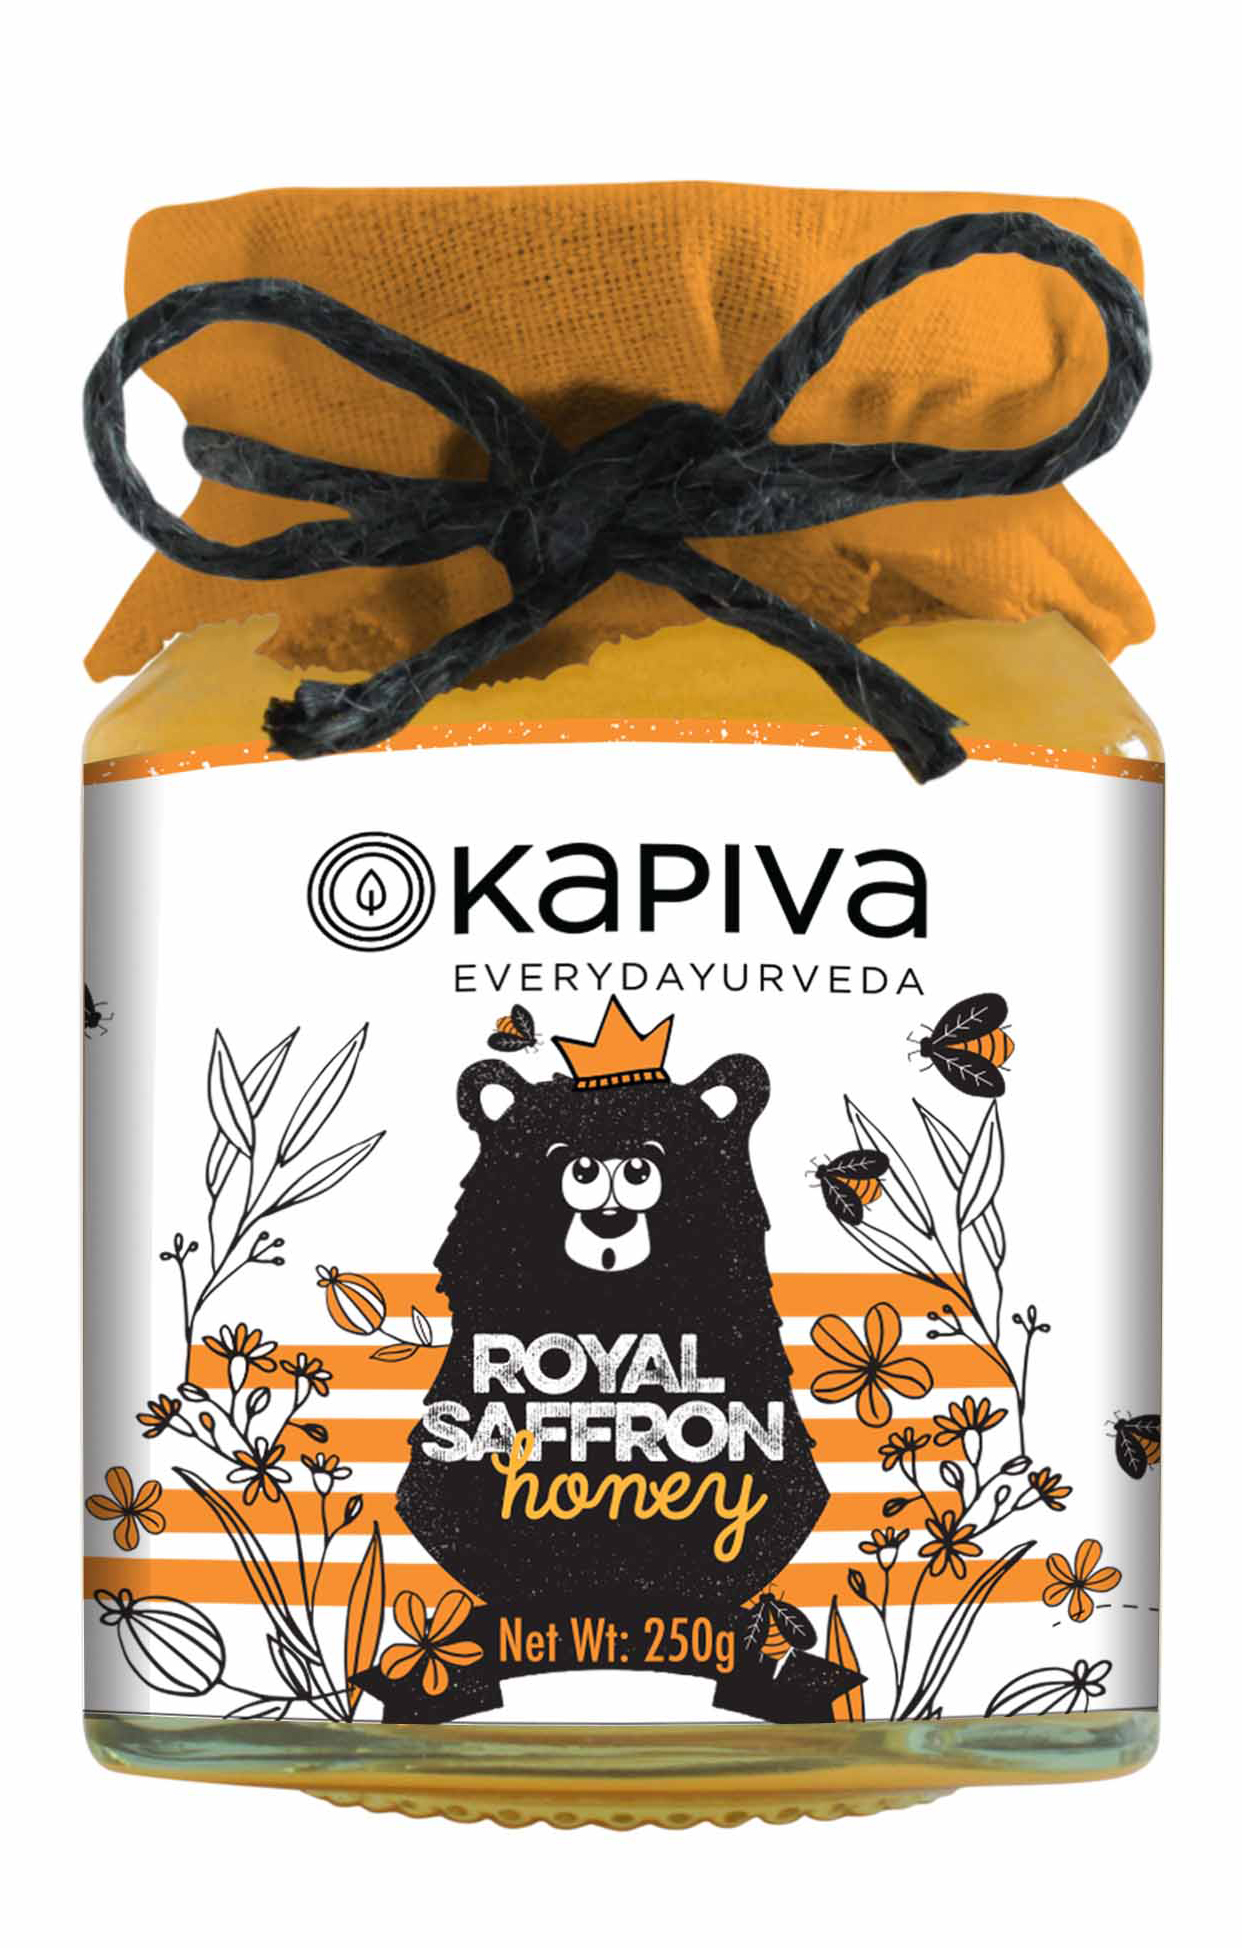 Buy Kapiva Royal Saffron Honey at Best Price Online